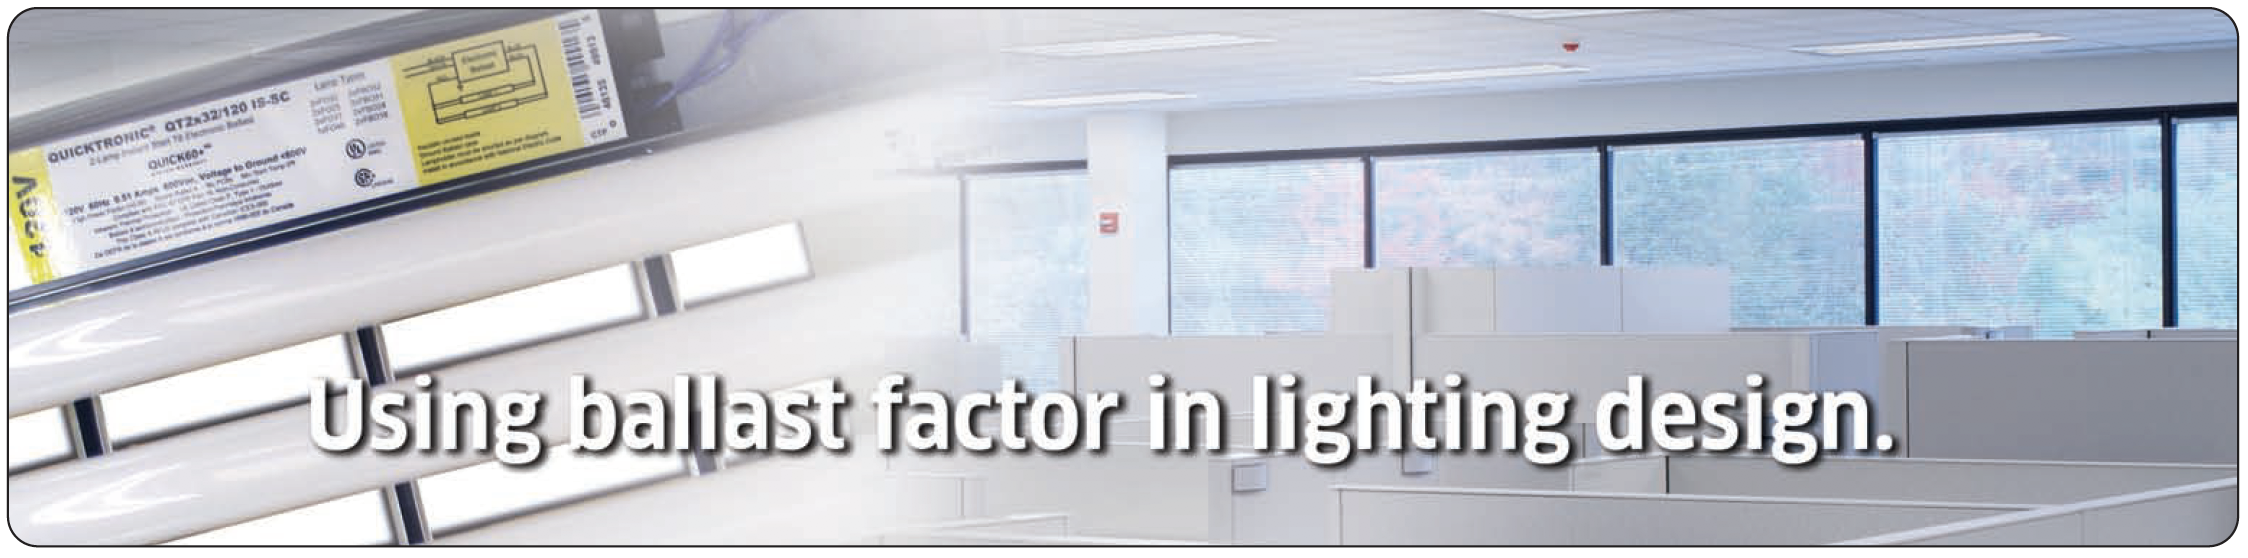 Using Ballast Factor in Lighting Design